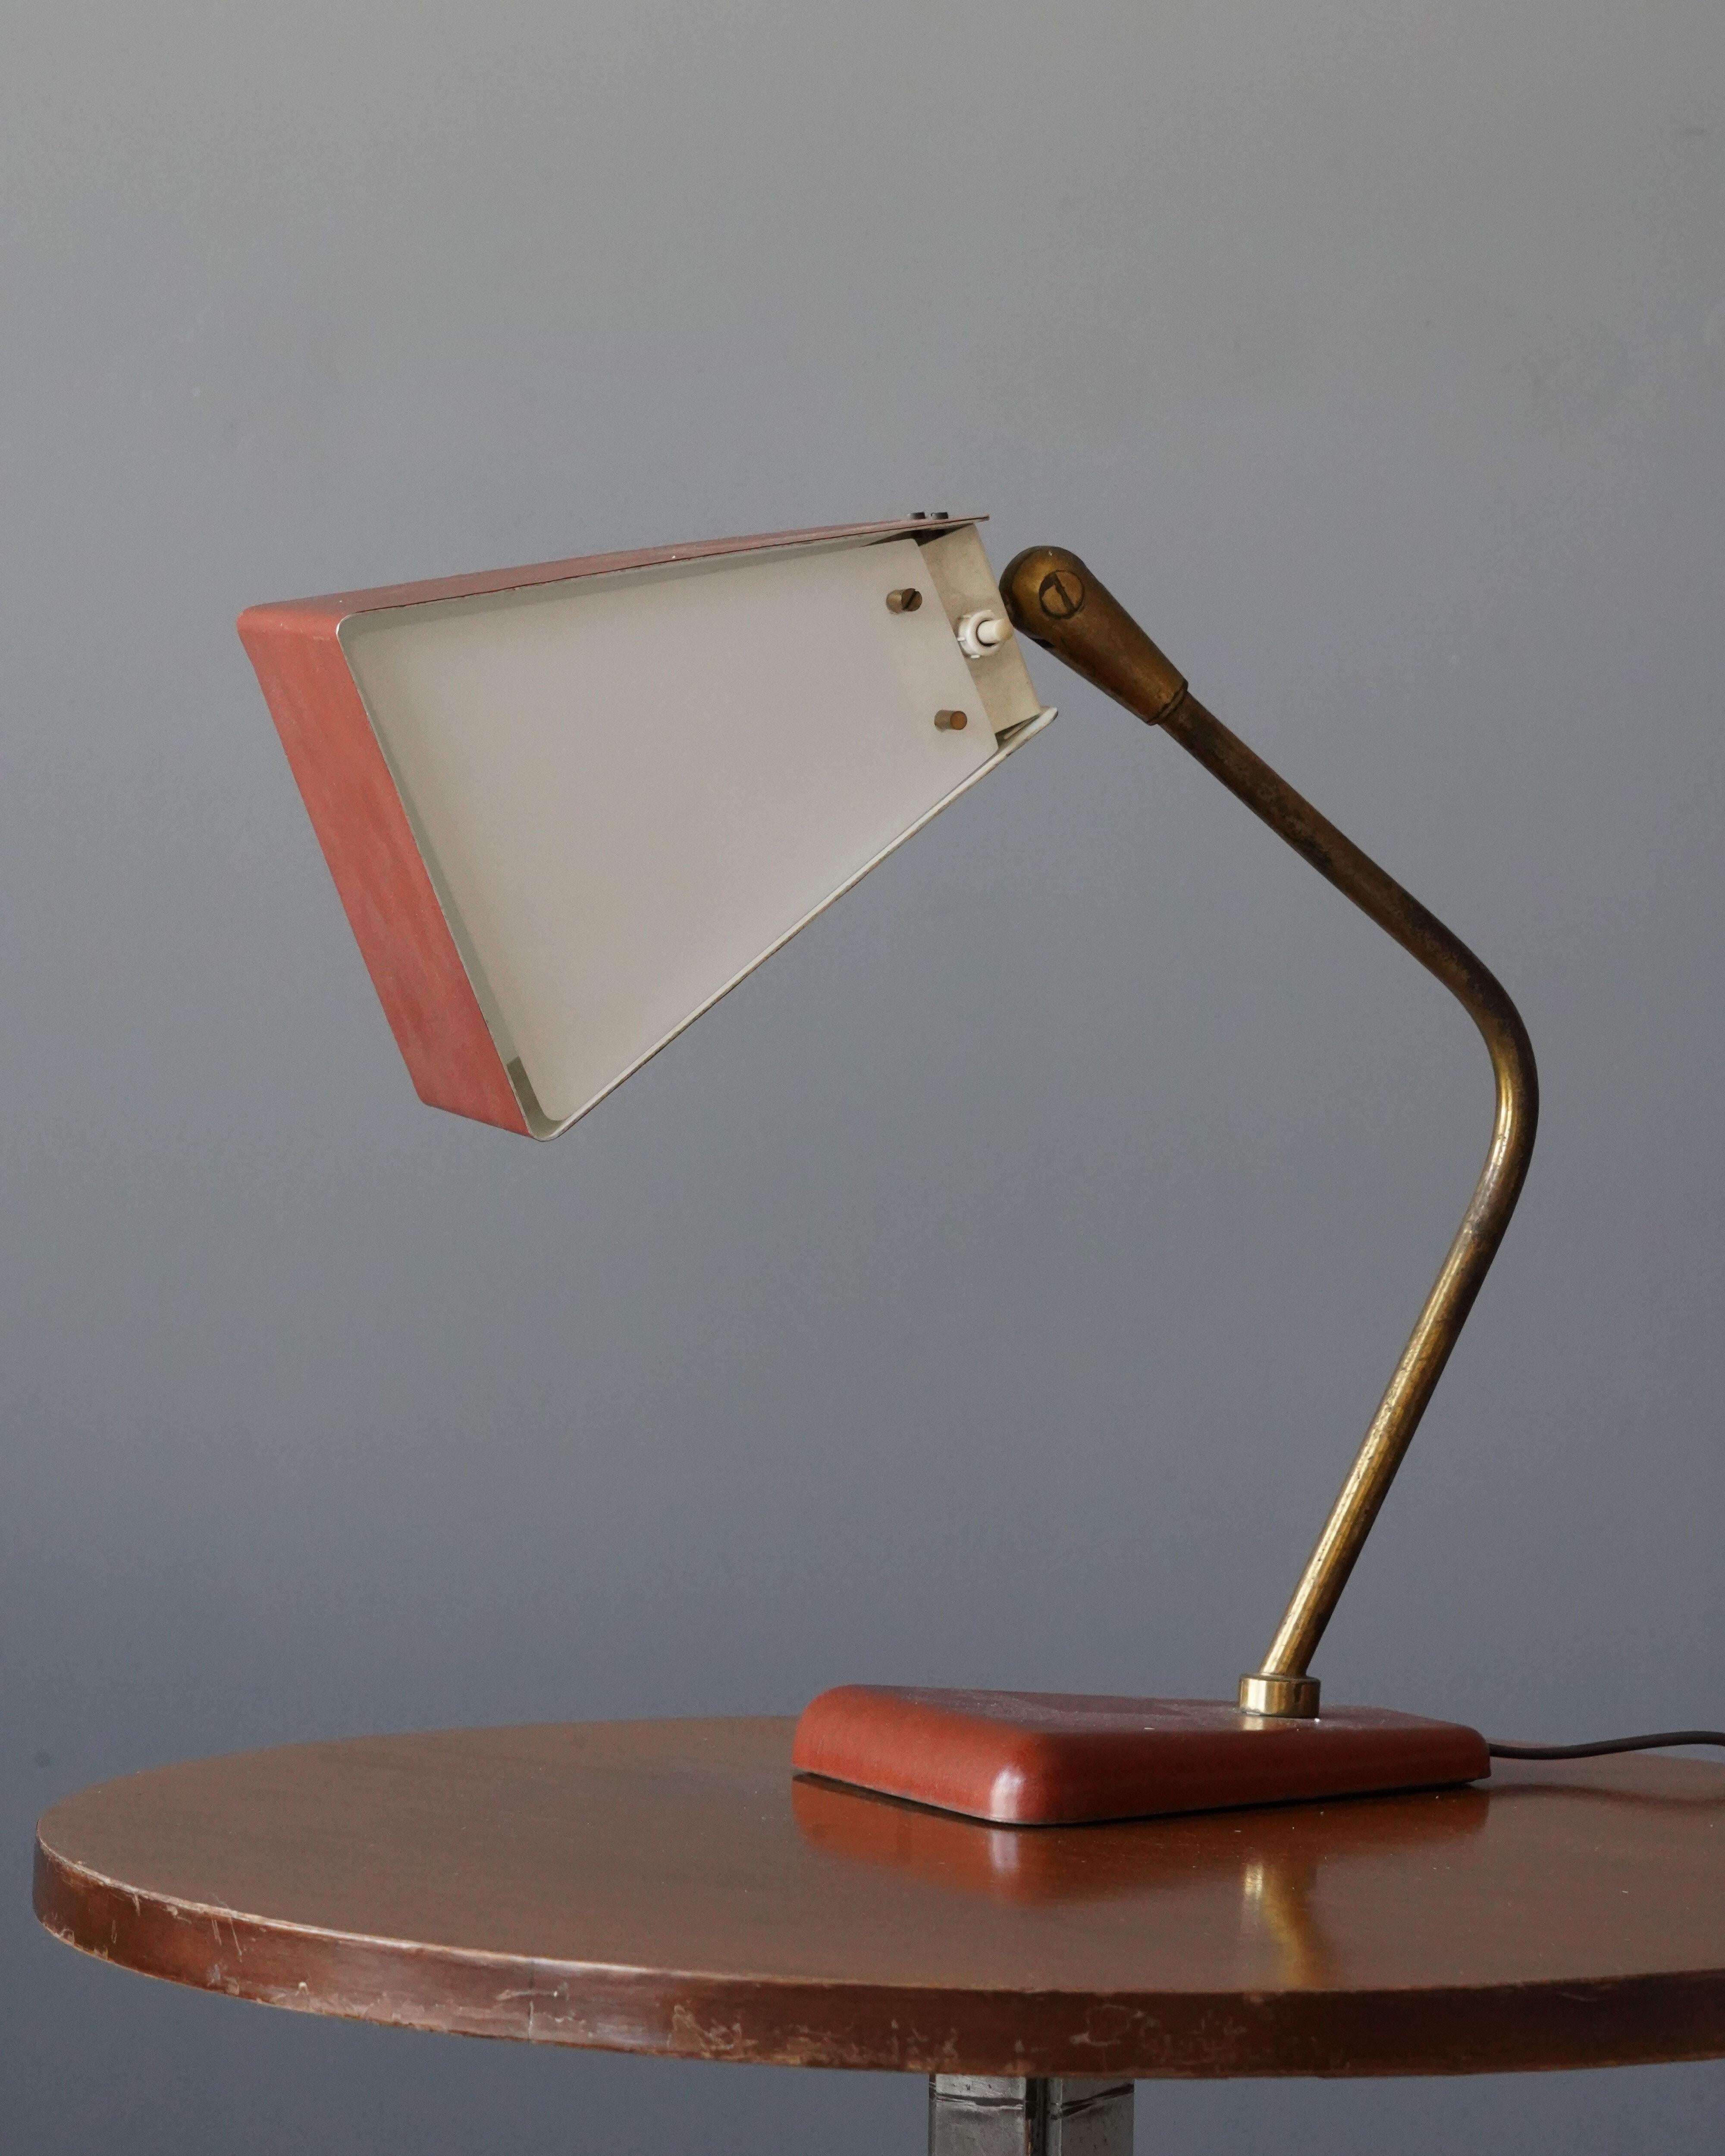 A rare Minimalist table or desk lamp. Produced by Stilnovo, Milan, Italy, 1950s.

Other designers of the period include Max Ingrand, Gino Sarfatti, Achille Castiglioni, Gio Ponti, and Angelo Lelii.